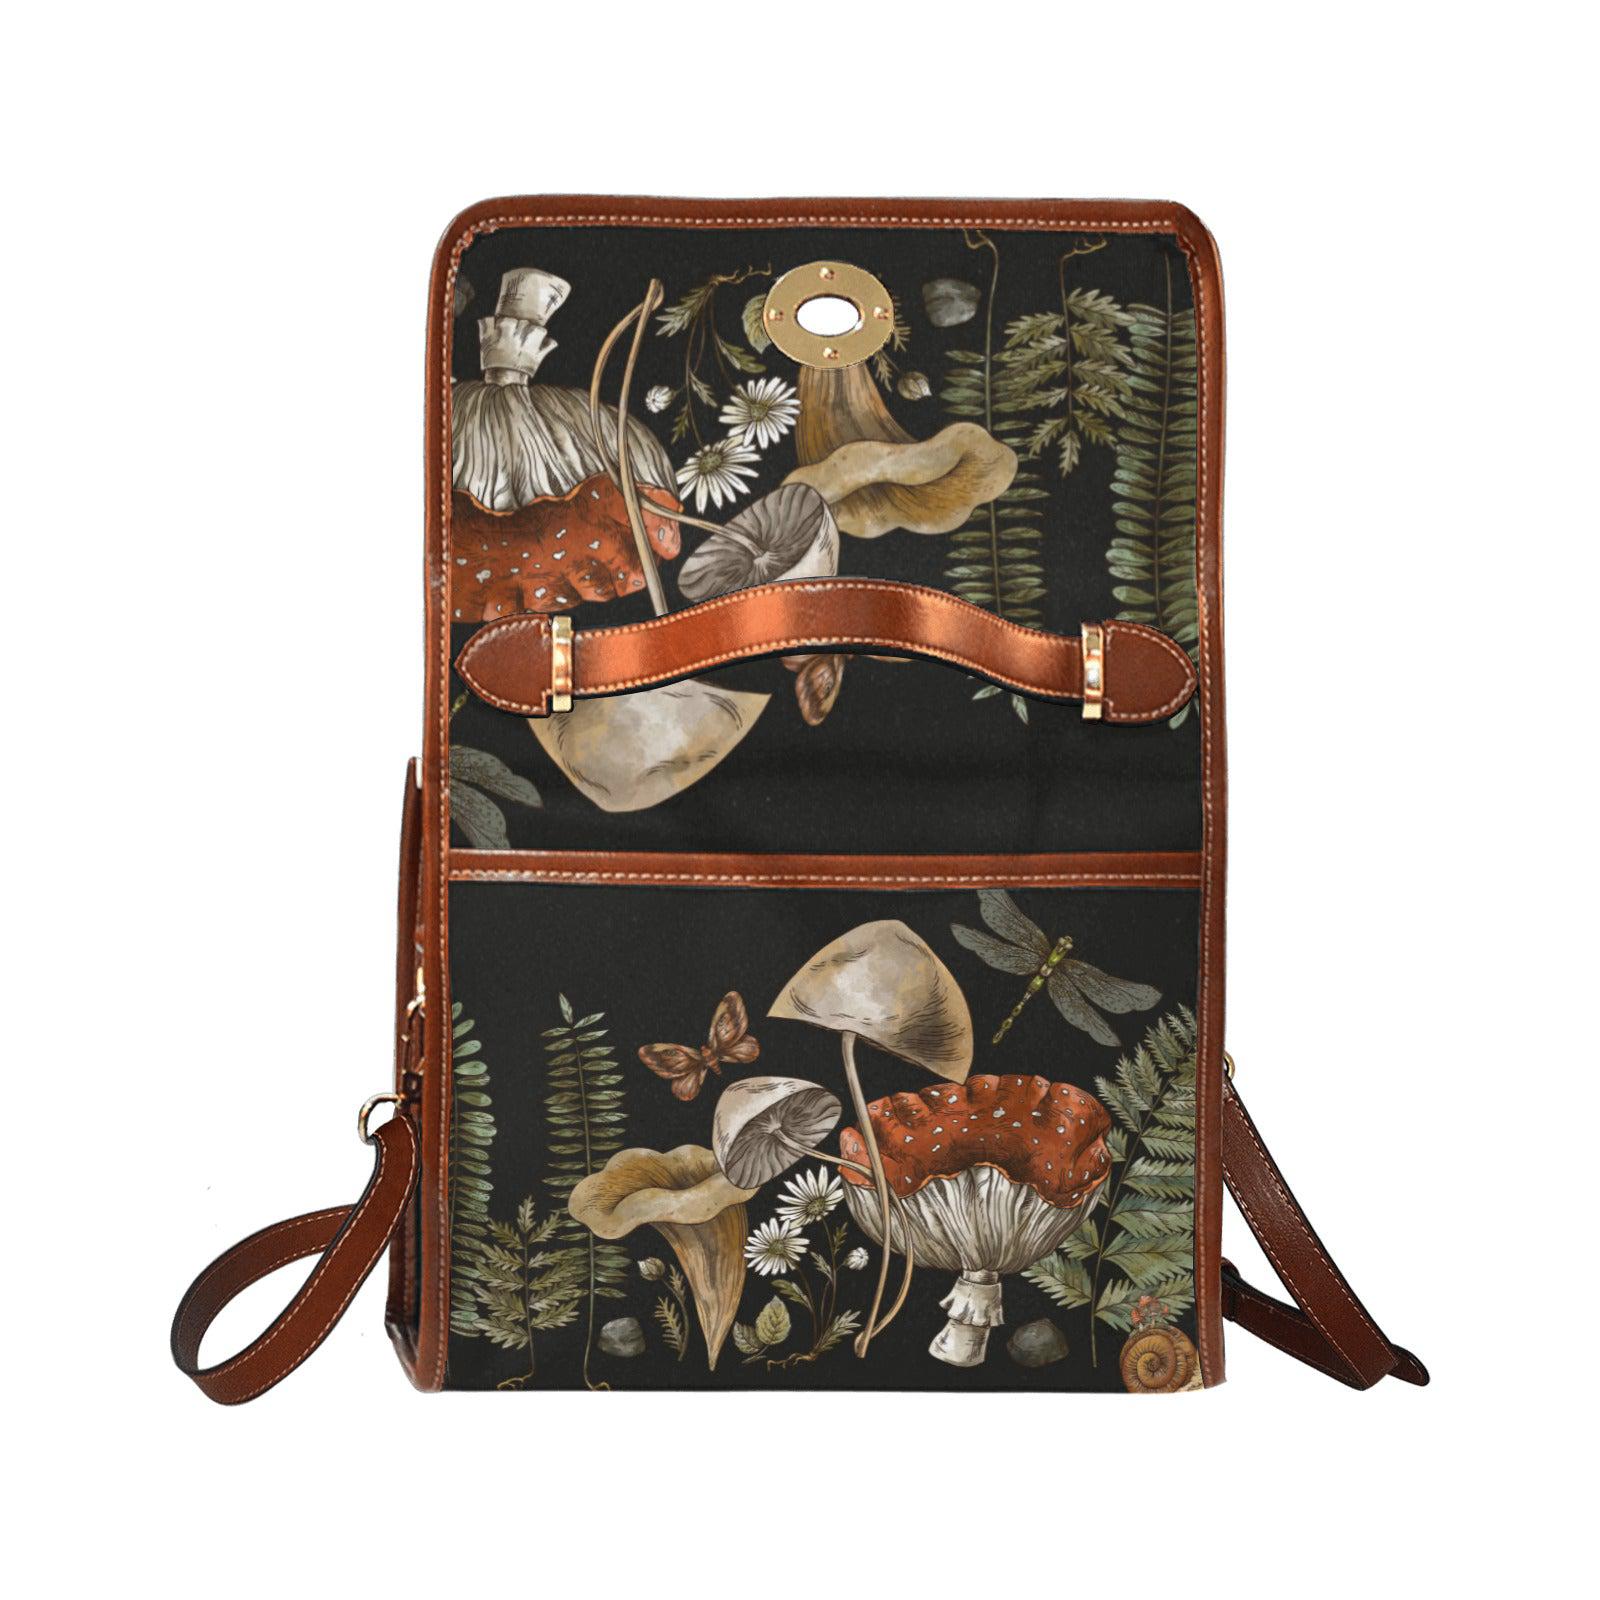 Lot - A mushroom leather dual handle handbag, two shoulder straps